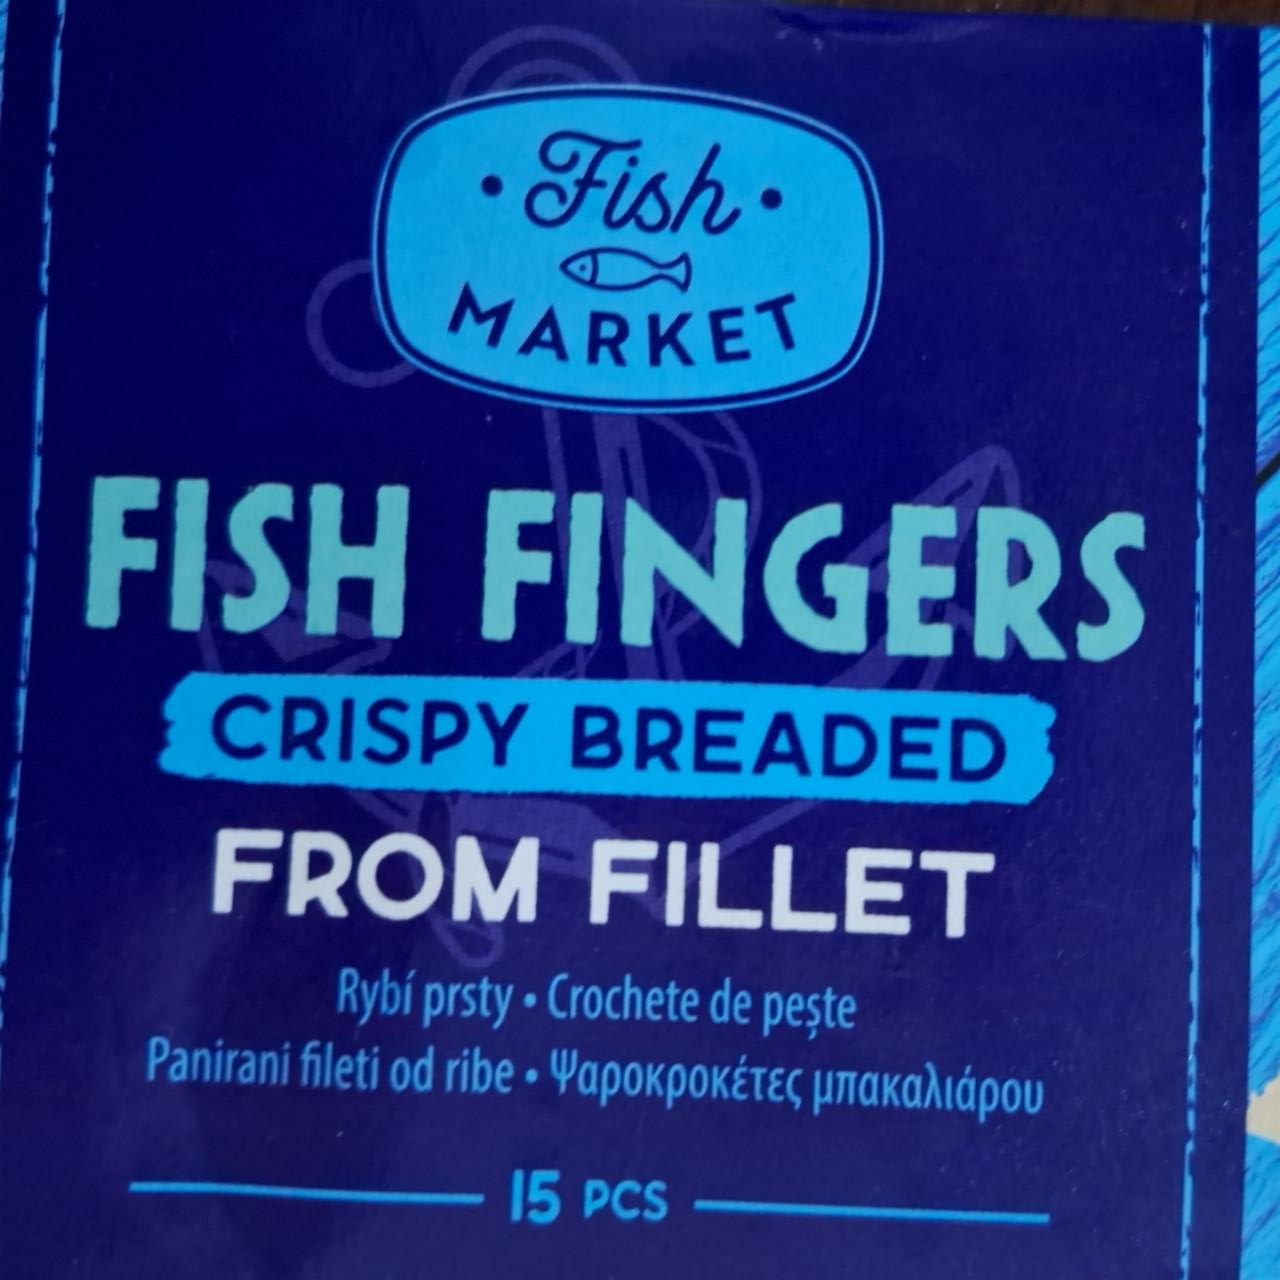 Fotografie - Fish fingers Crispy Breaded From Fillet Fish market